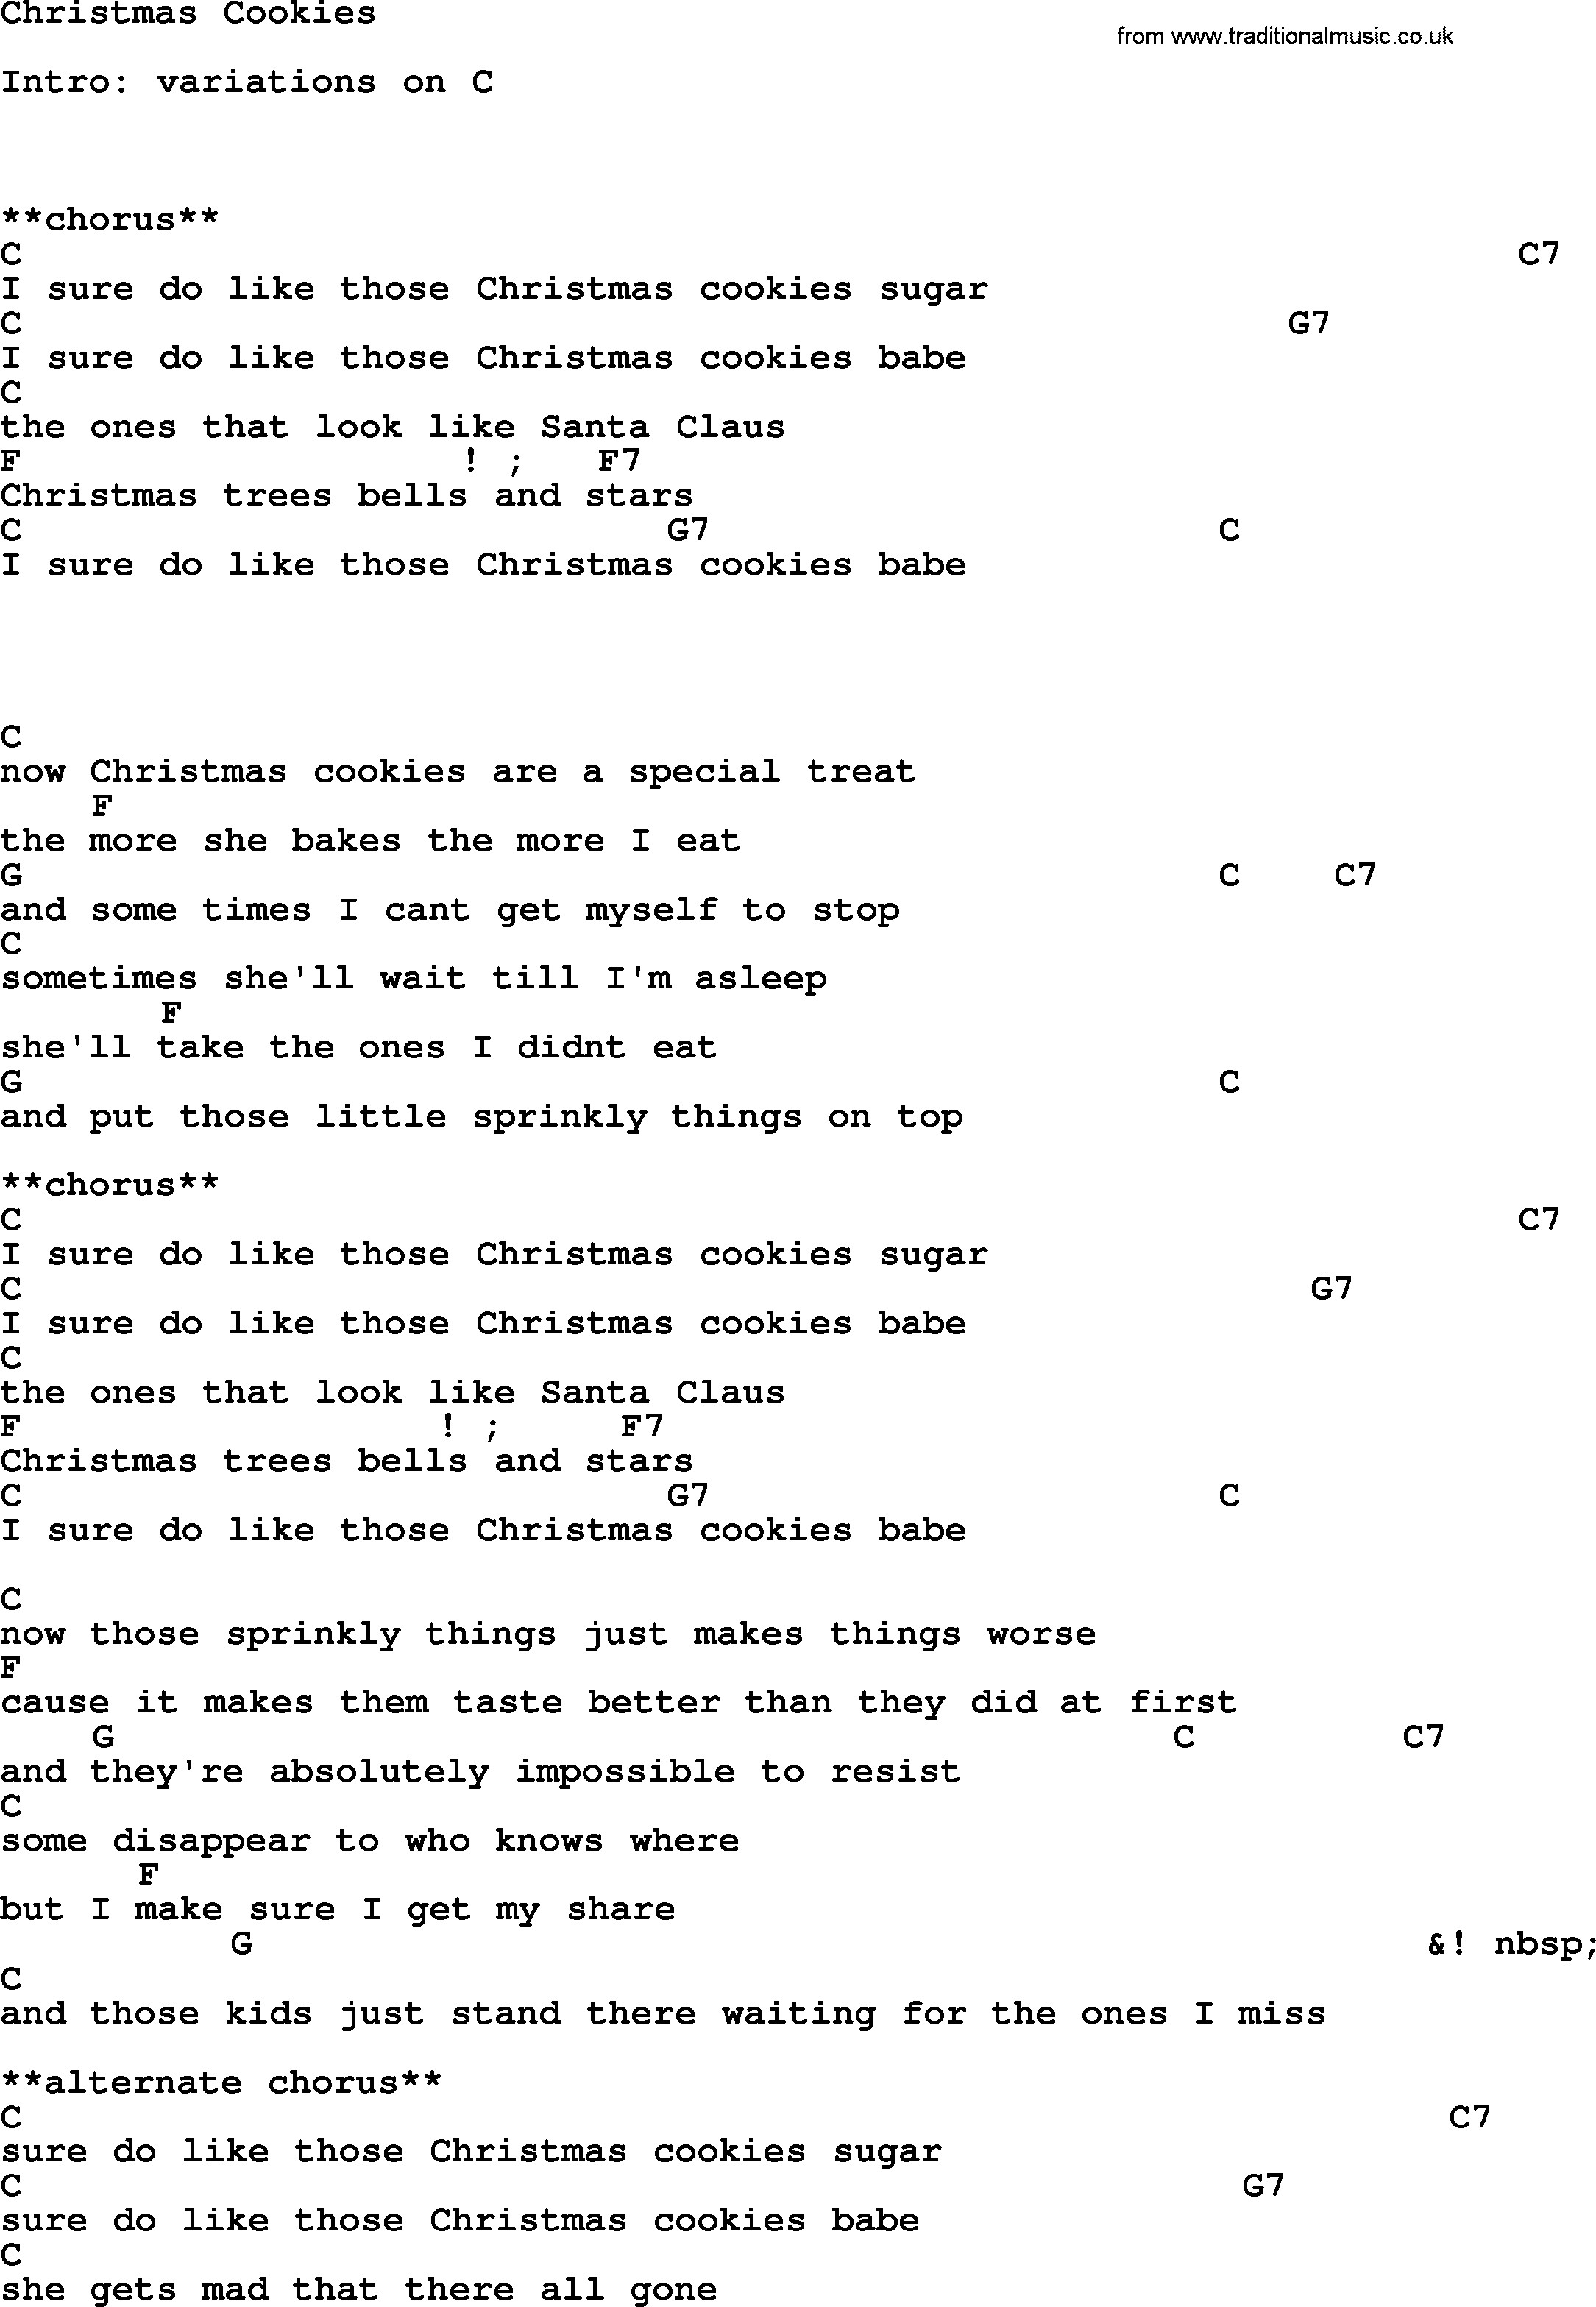 Christmas Cookies Song George Strait
 Christmas Cookies by George Strait lyrics and chords